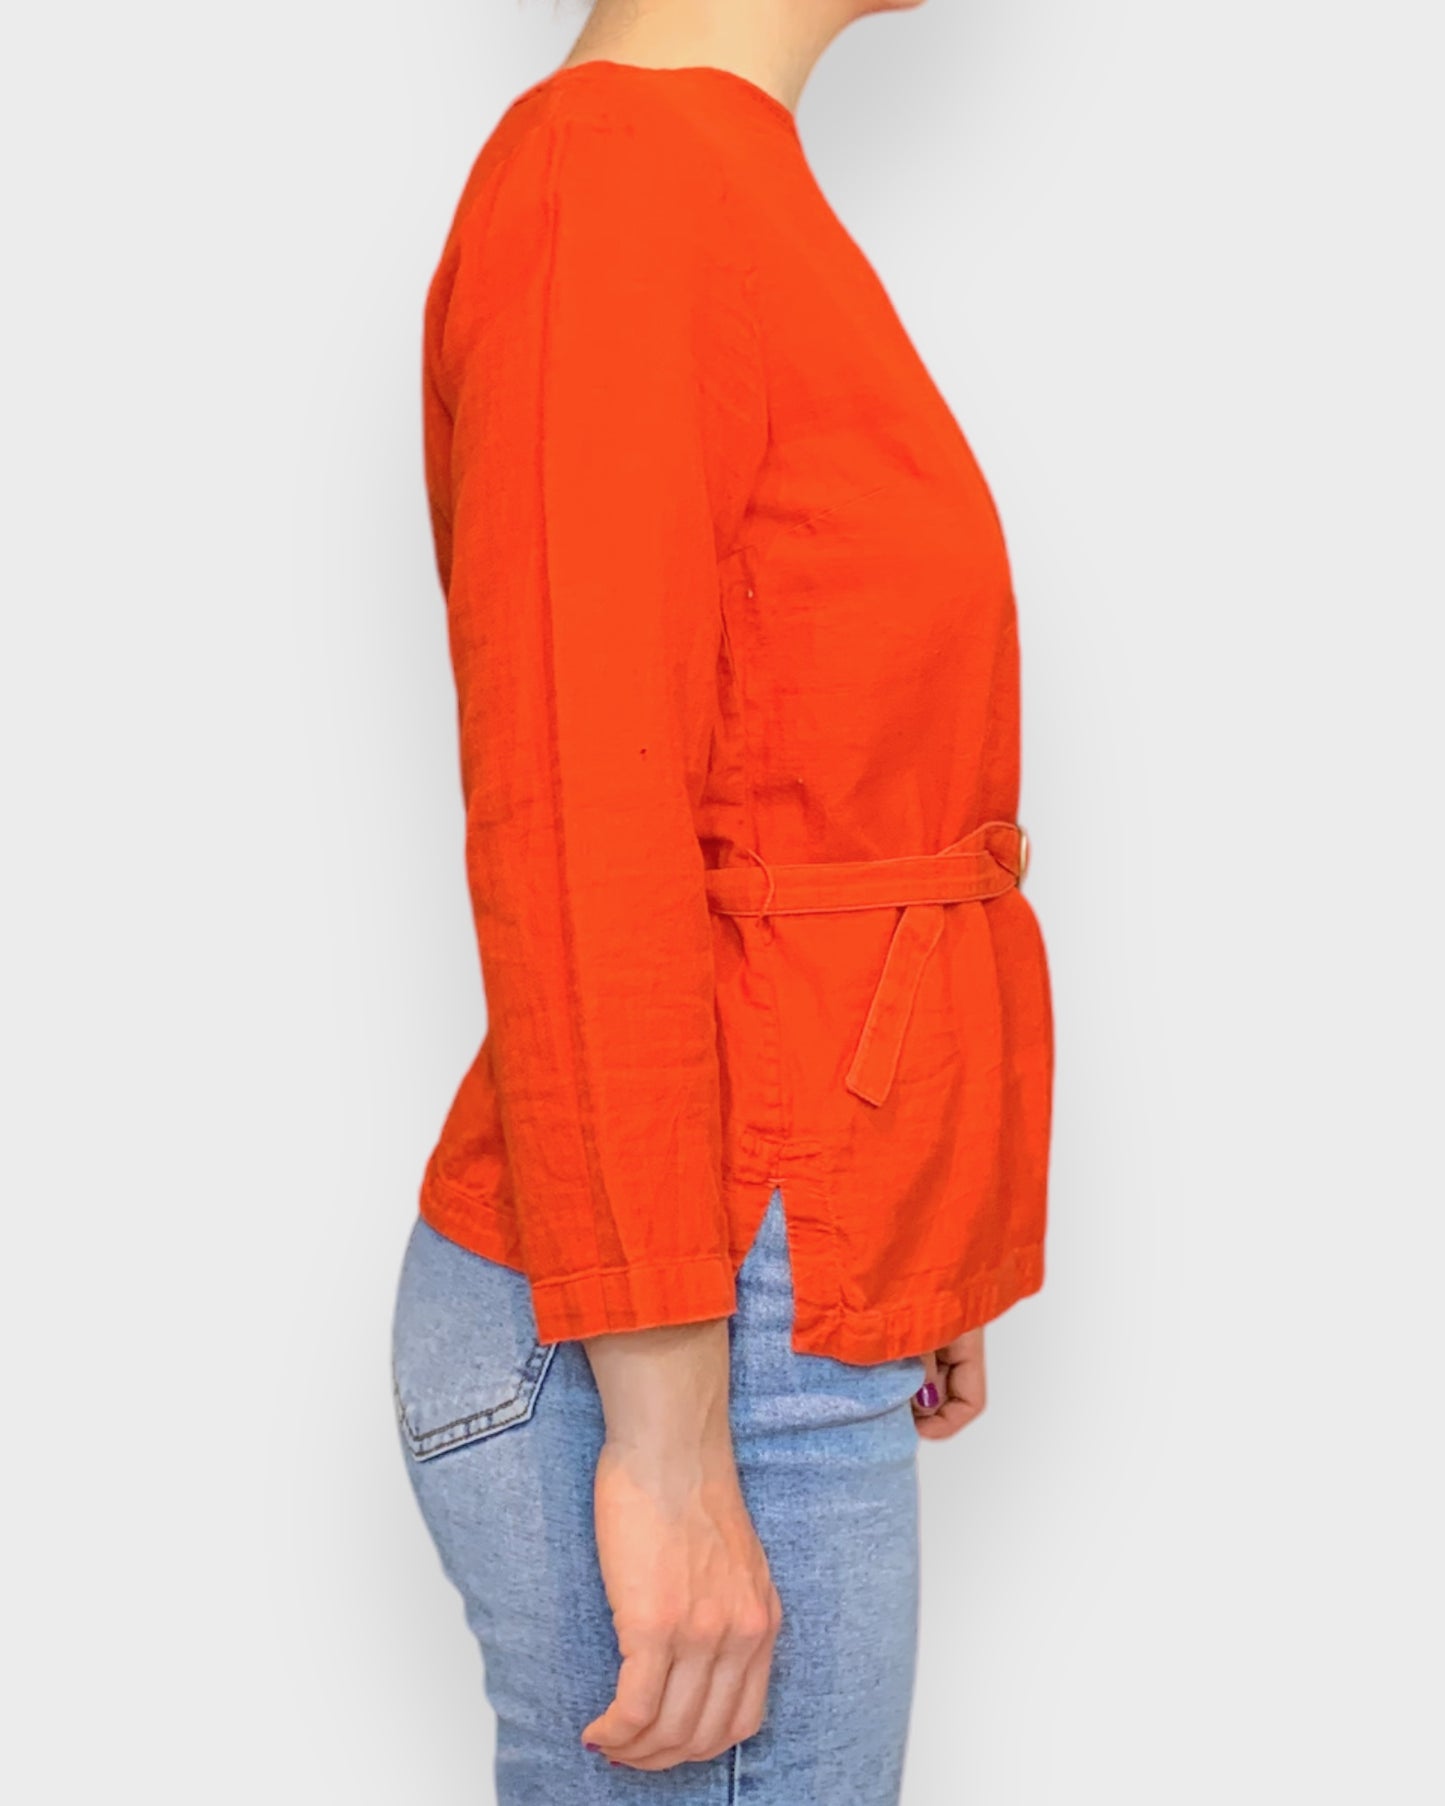 Orange apc blouse 100% cotton